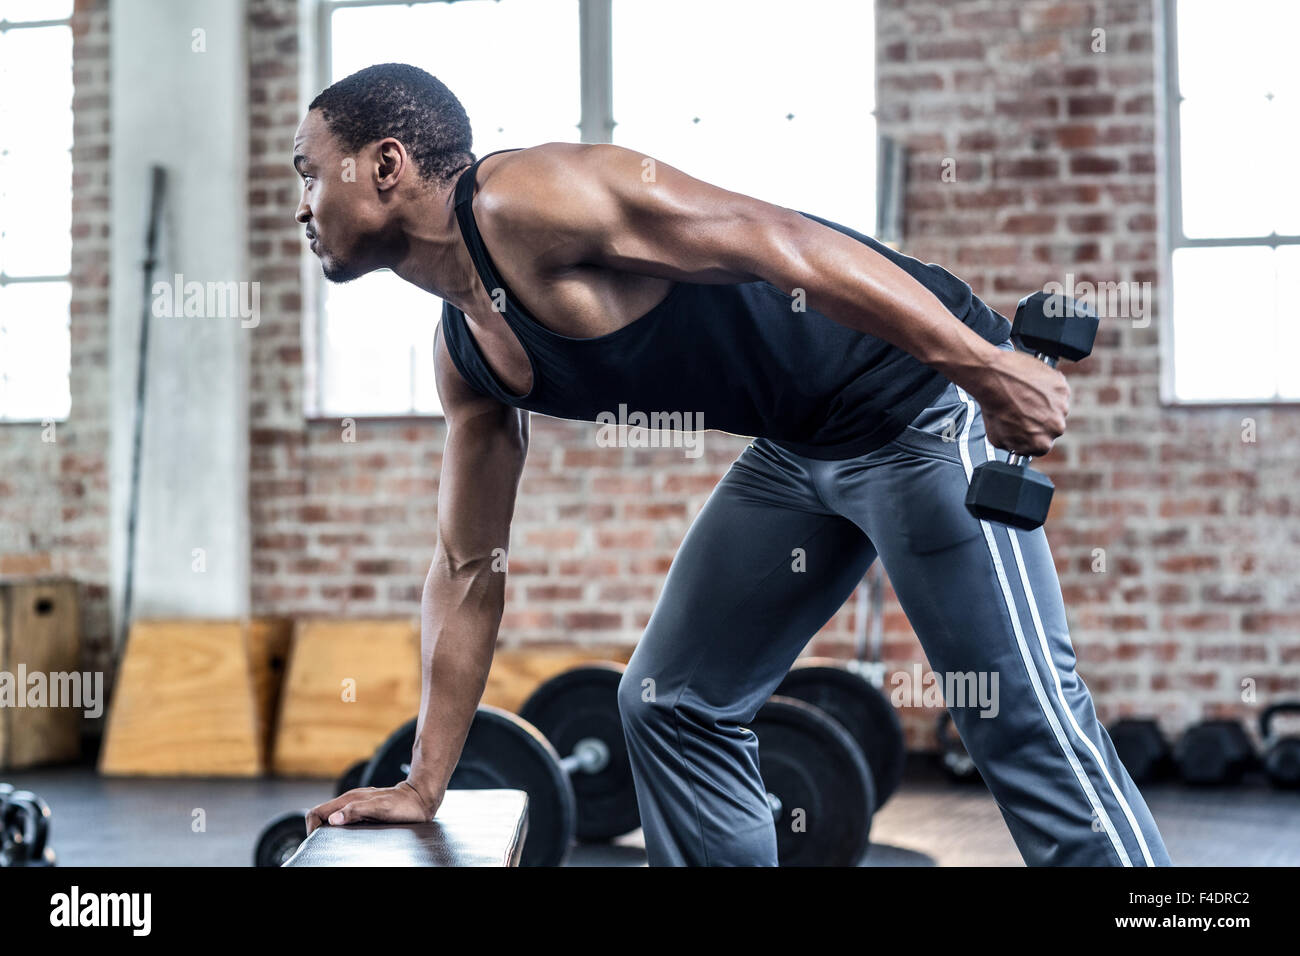 Muscular man doing dumbbell exercises Stock Photo